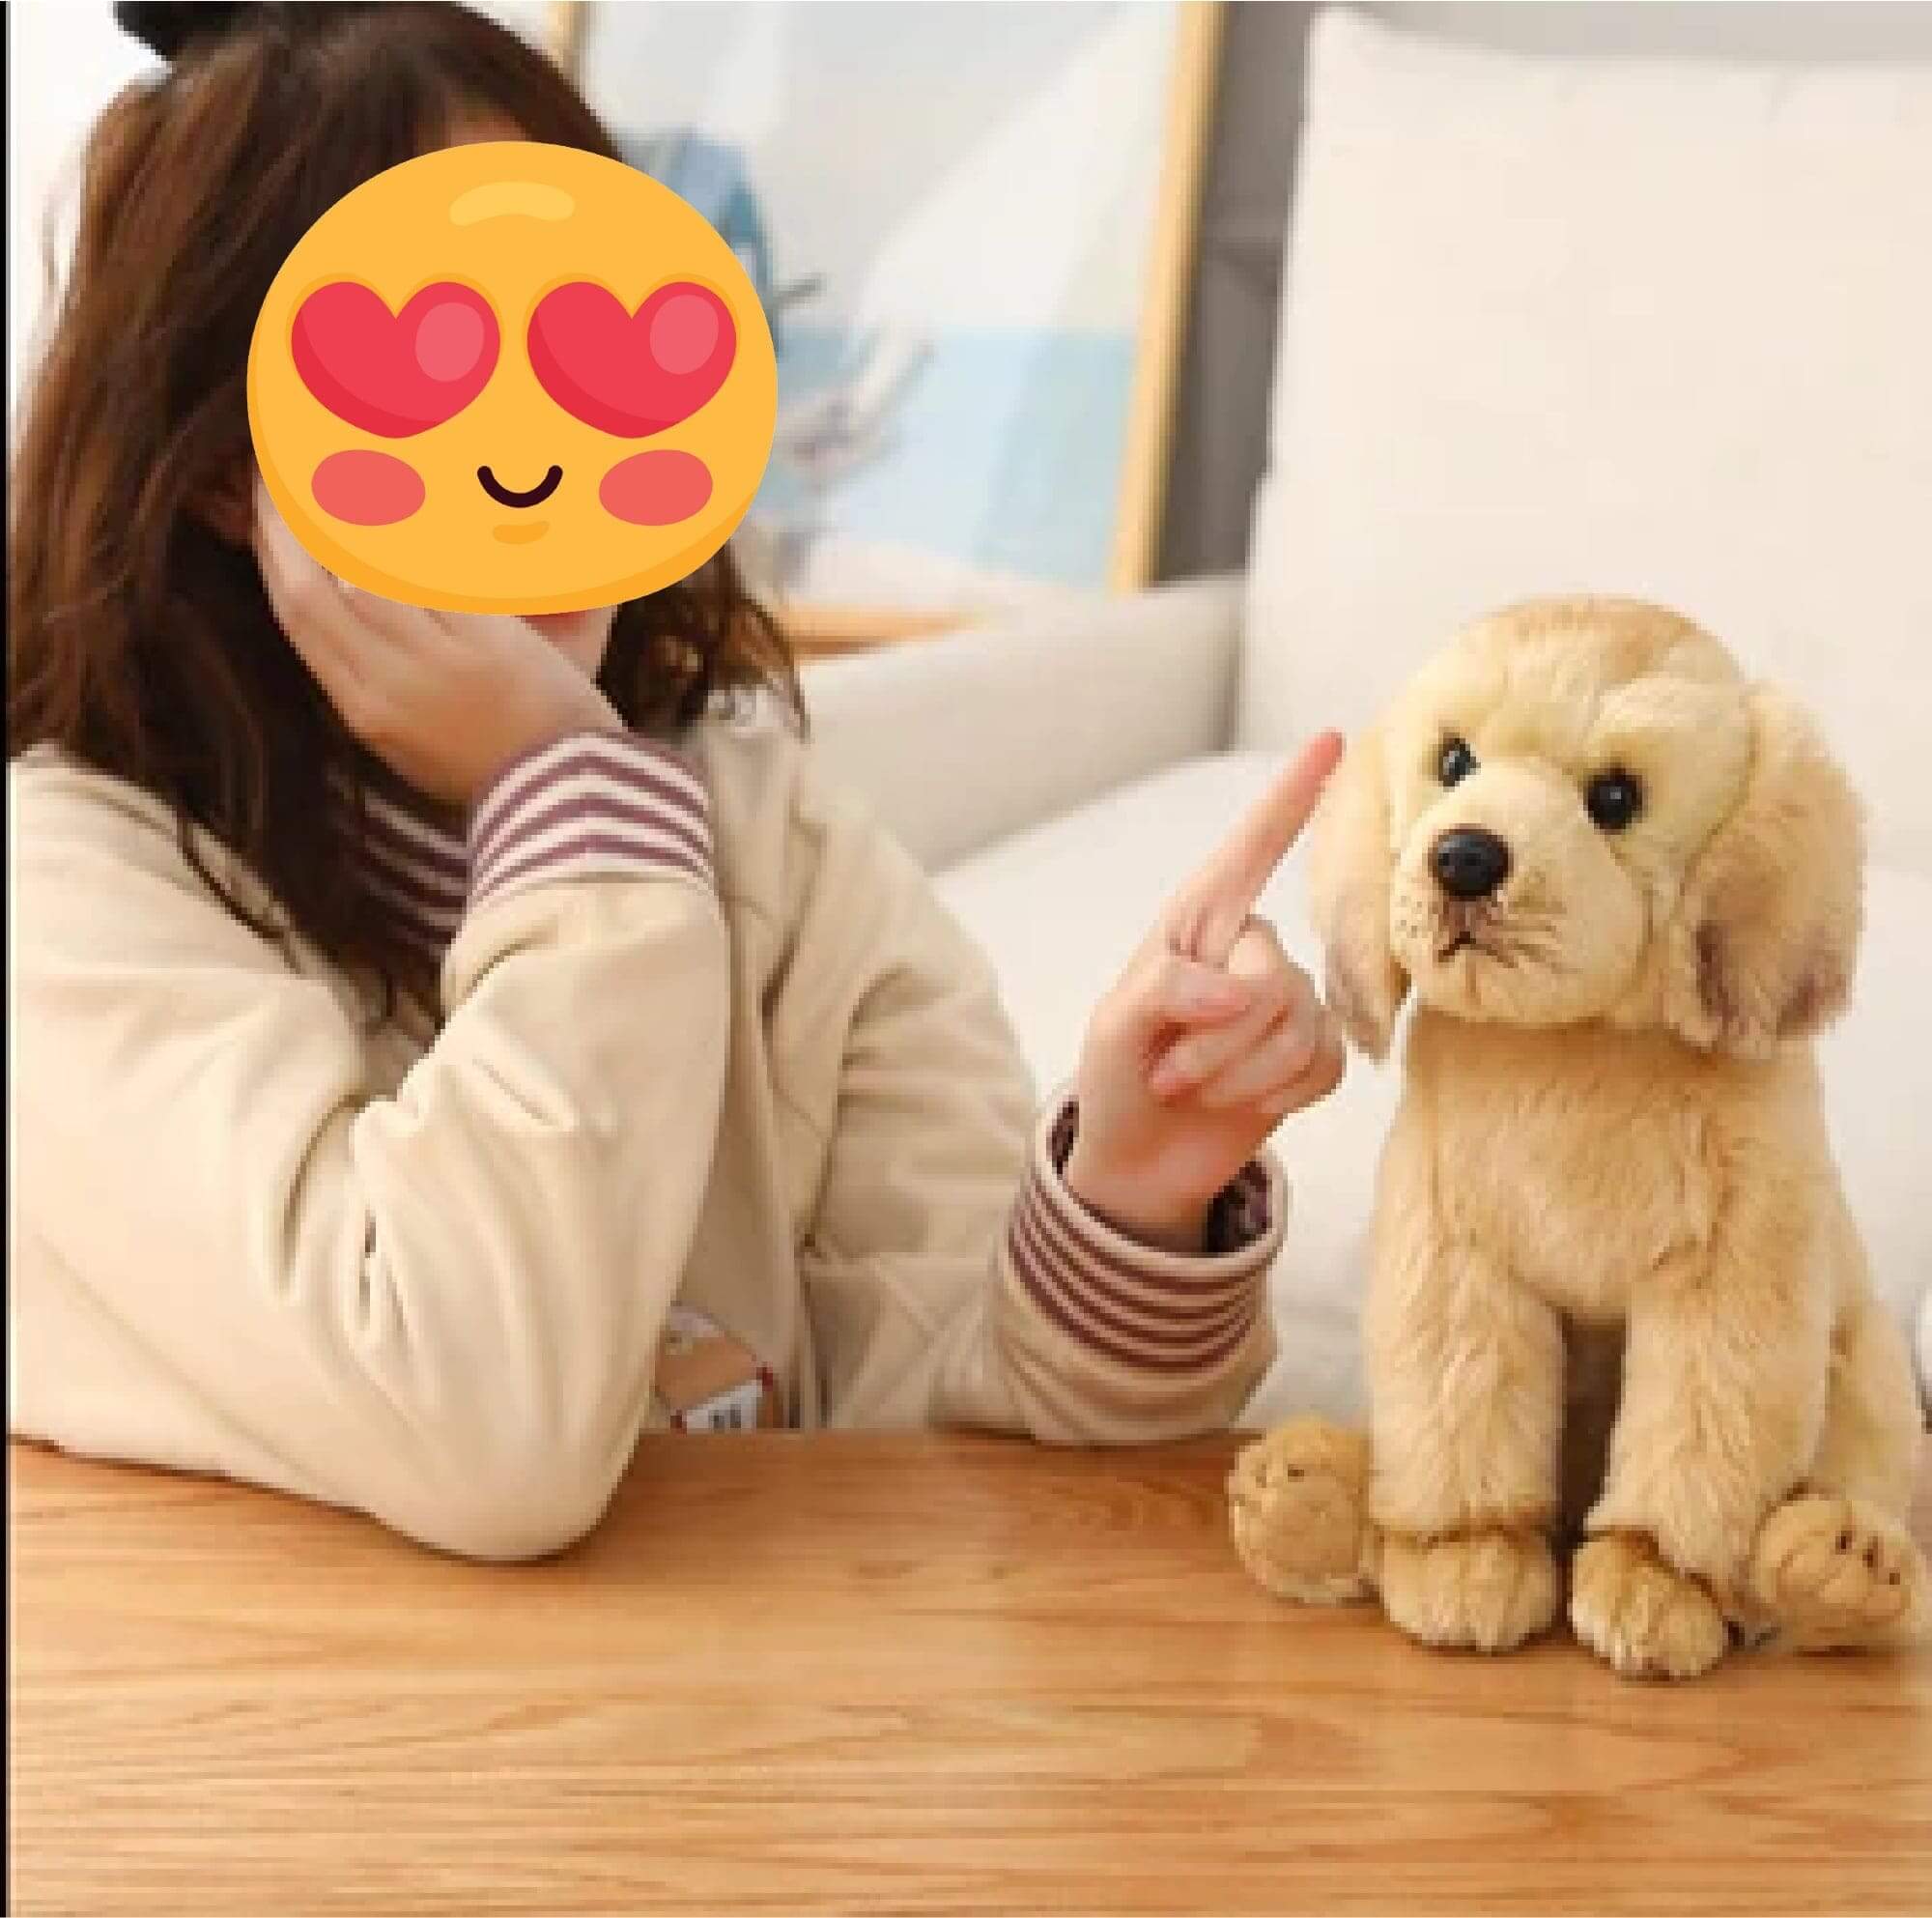 Golden Retriever Stuffed Animal Plush Toy